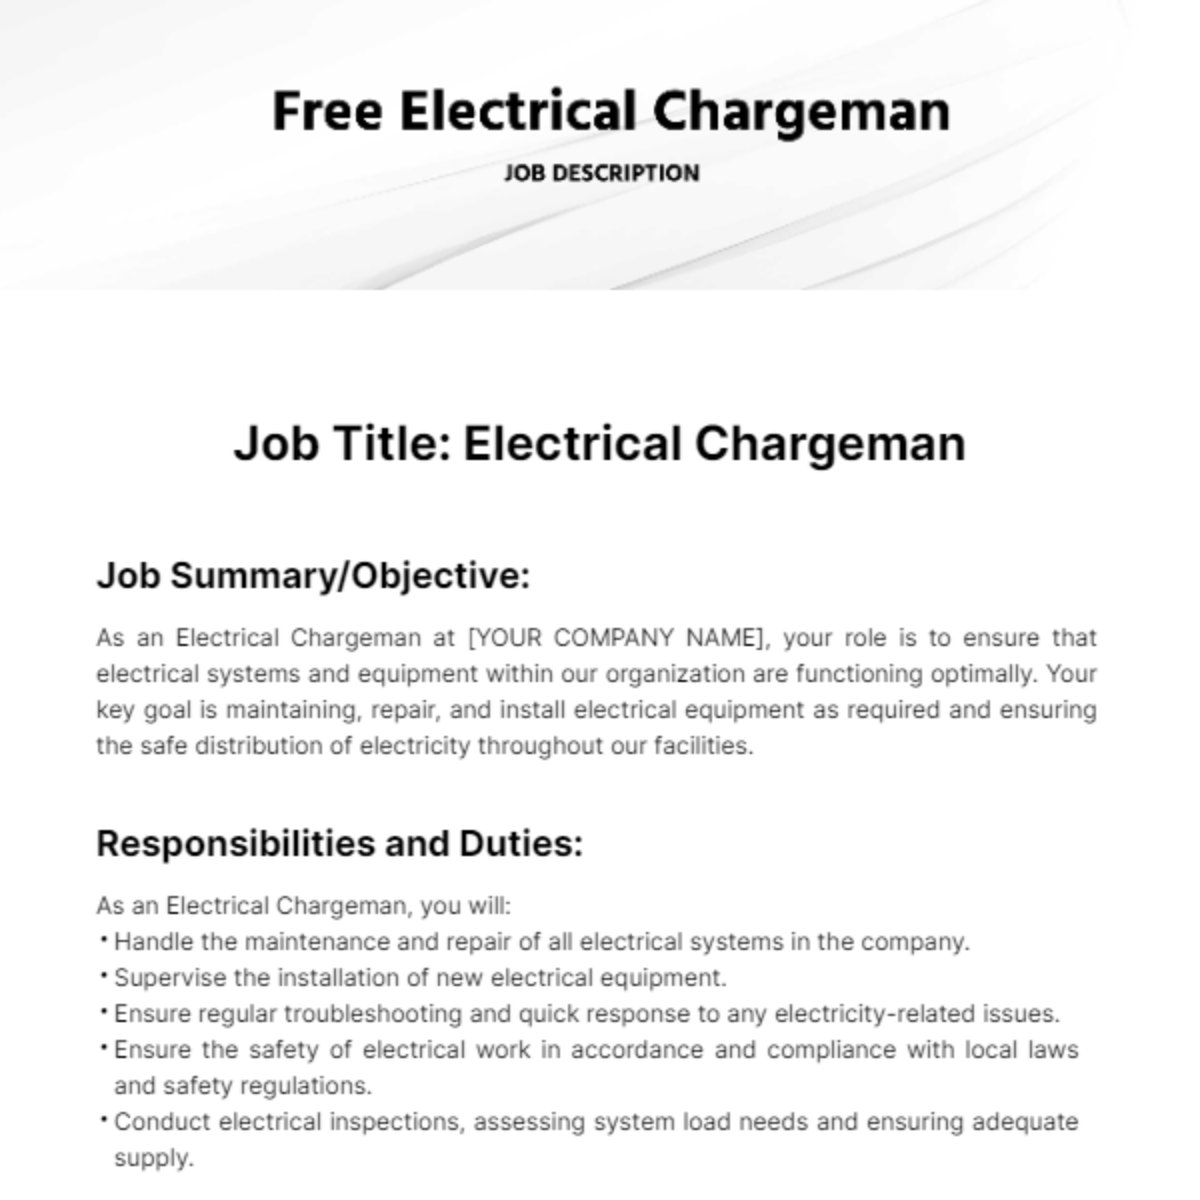 Electrical Chargeman Job Description Template